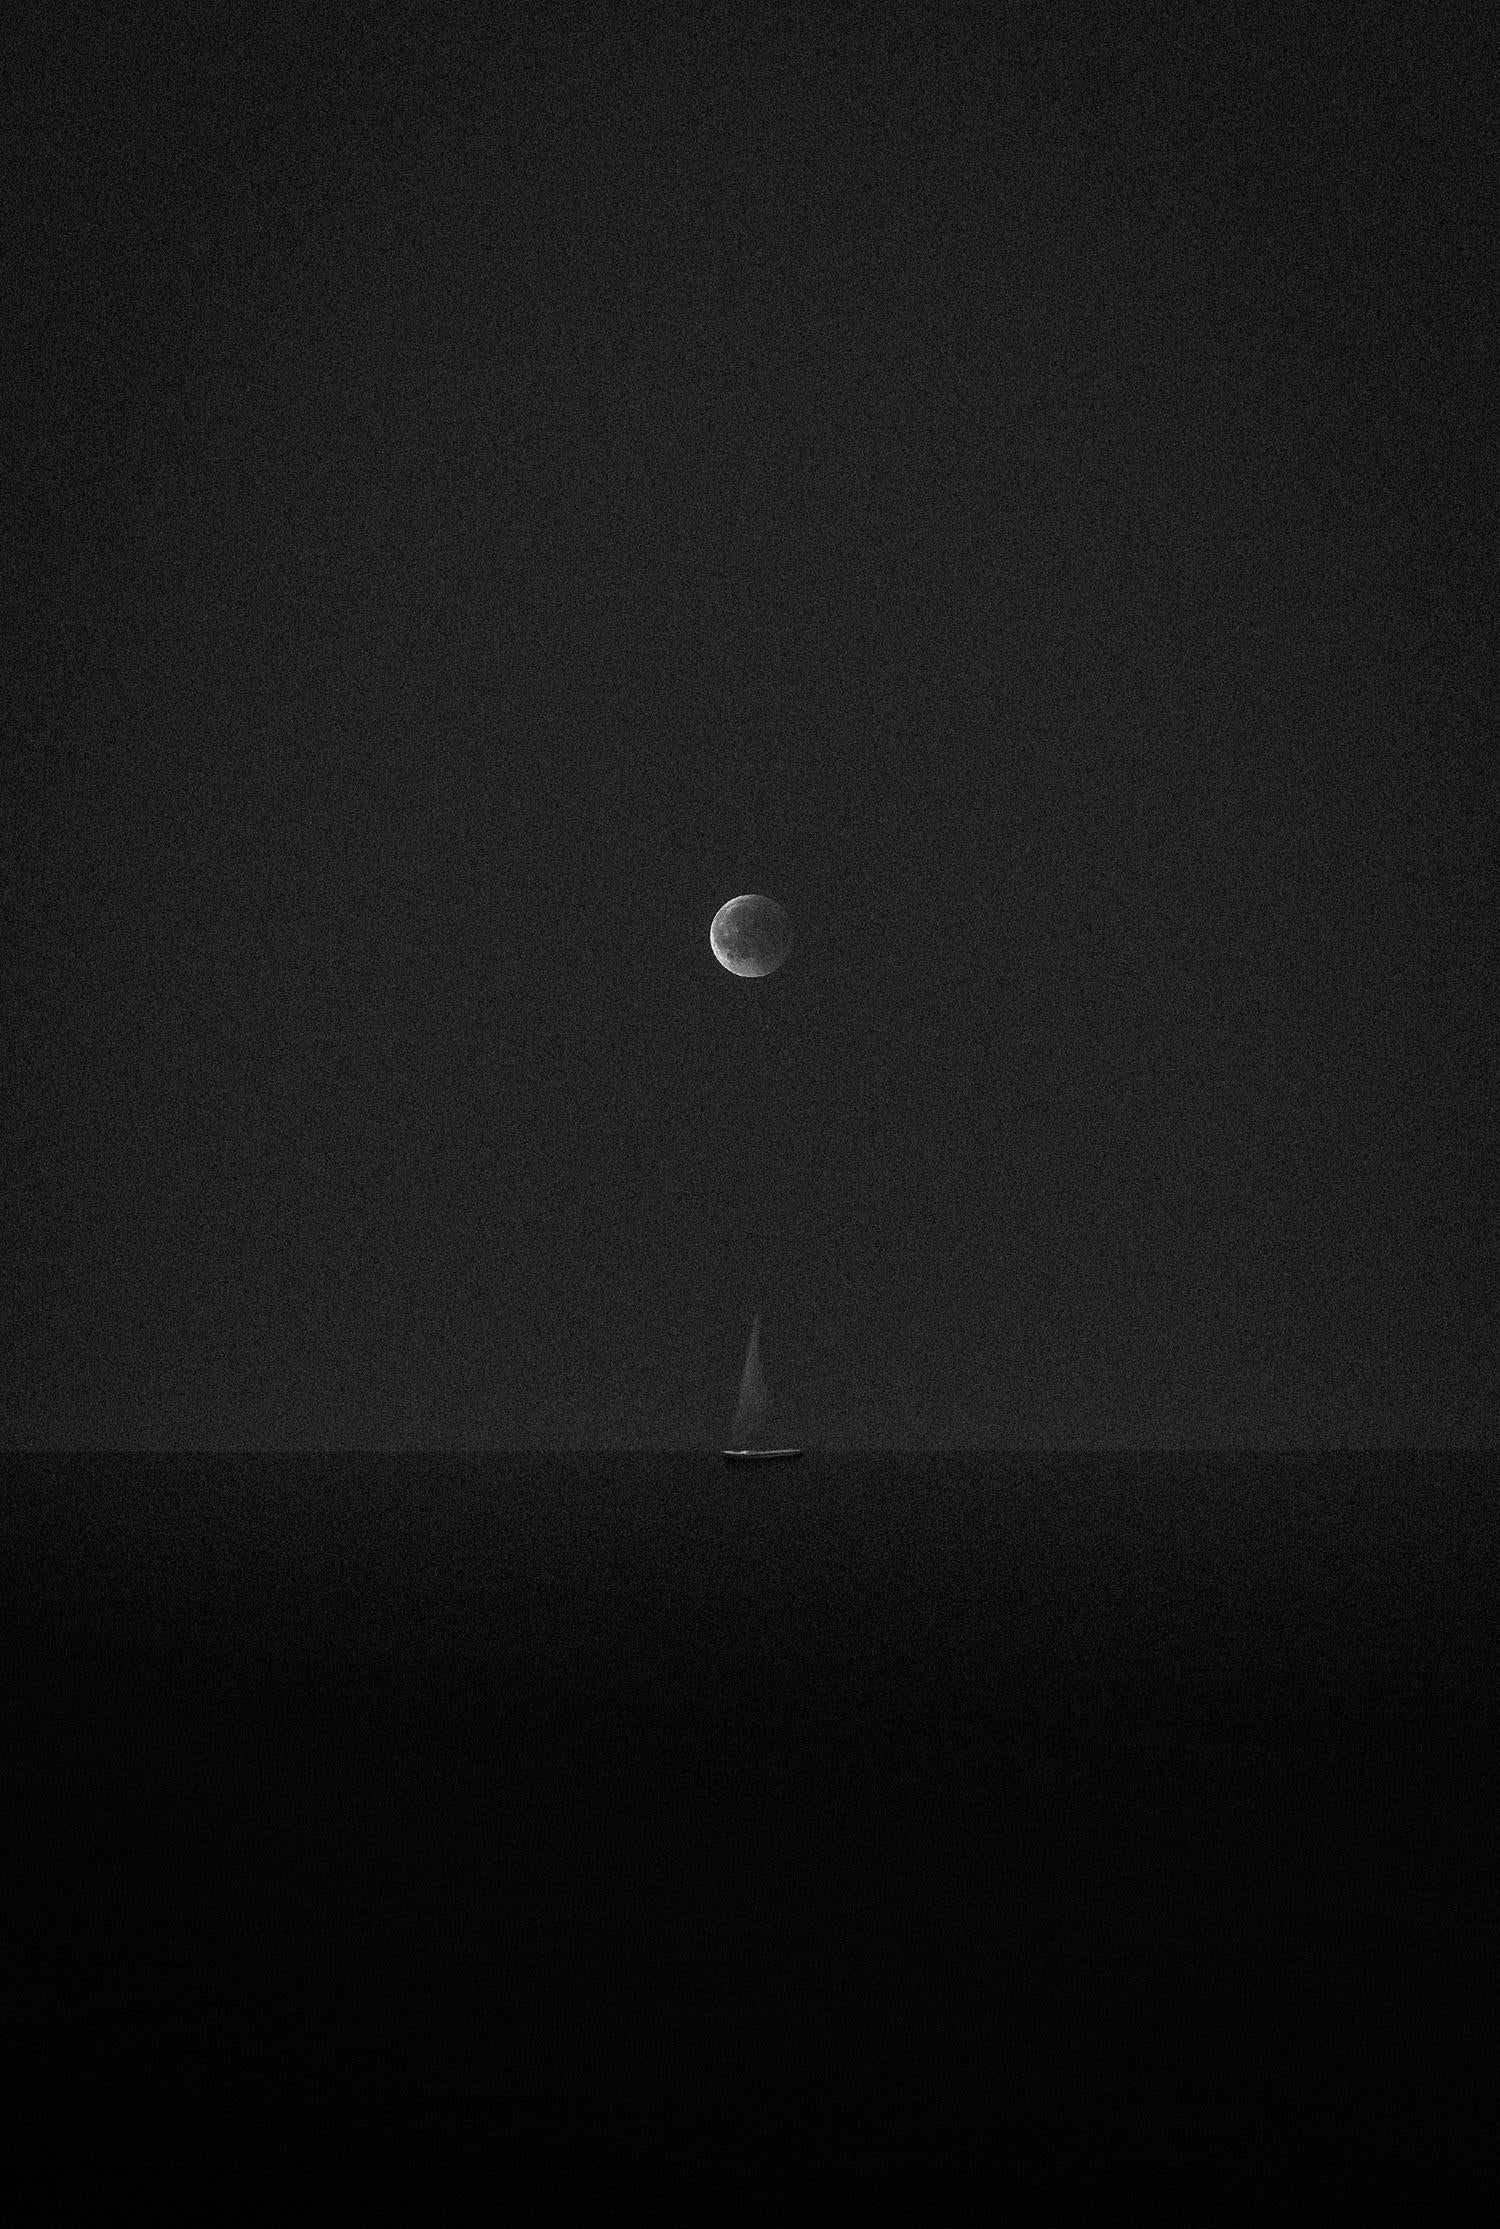 Karim Amr Landscape Photograph - 'A boat under the moon' Photography 64" x 44" framed by Karim